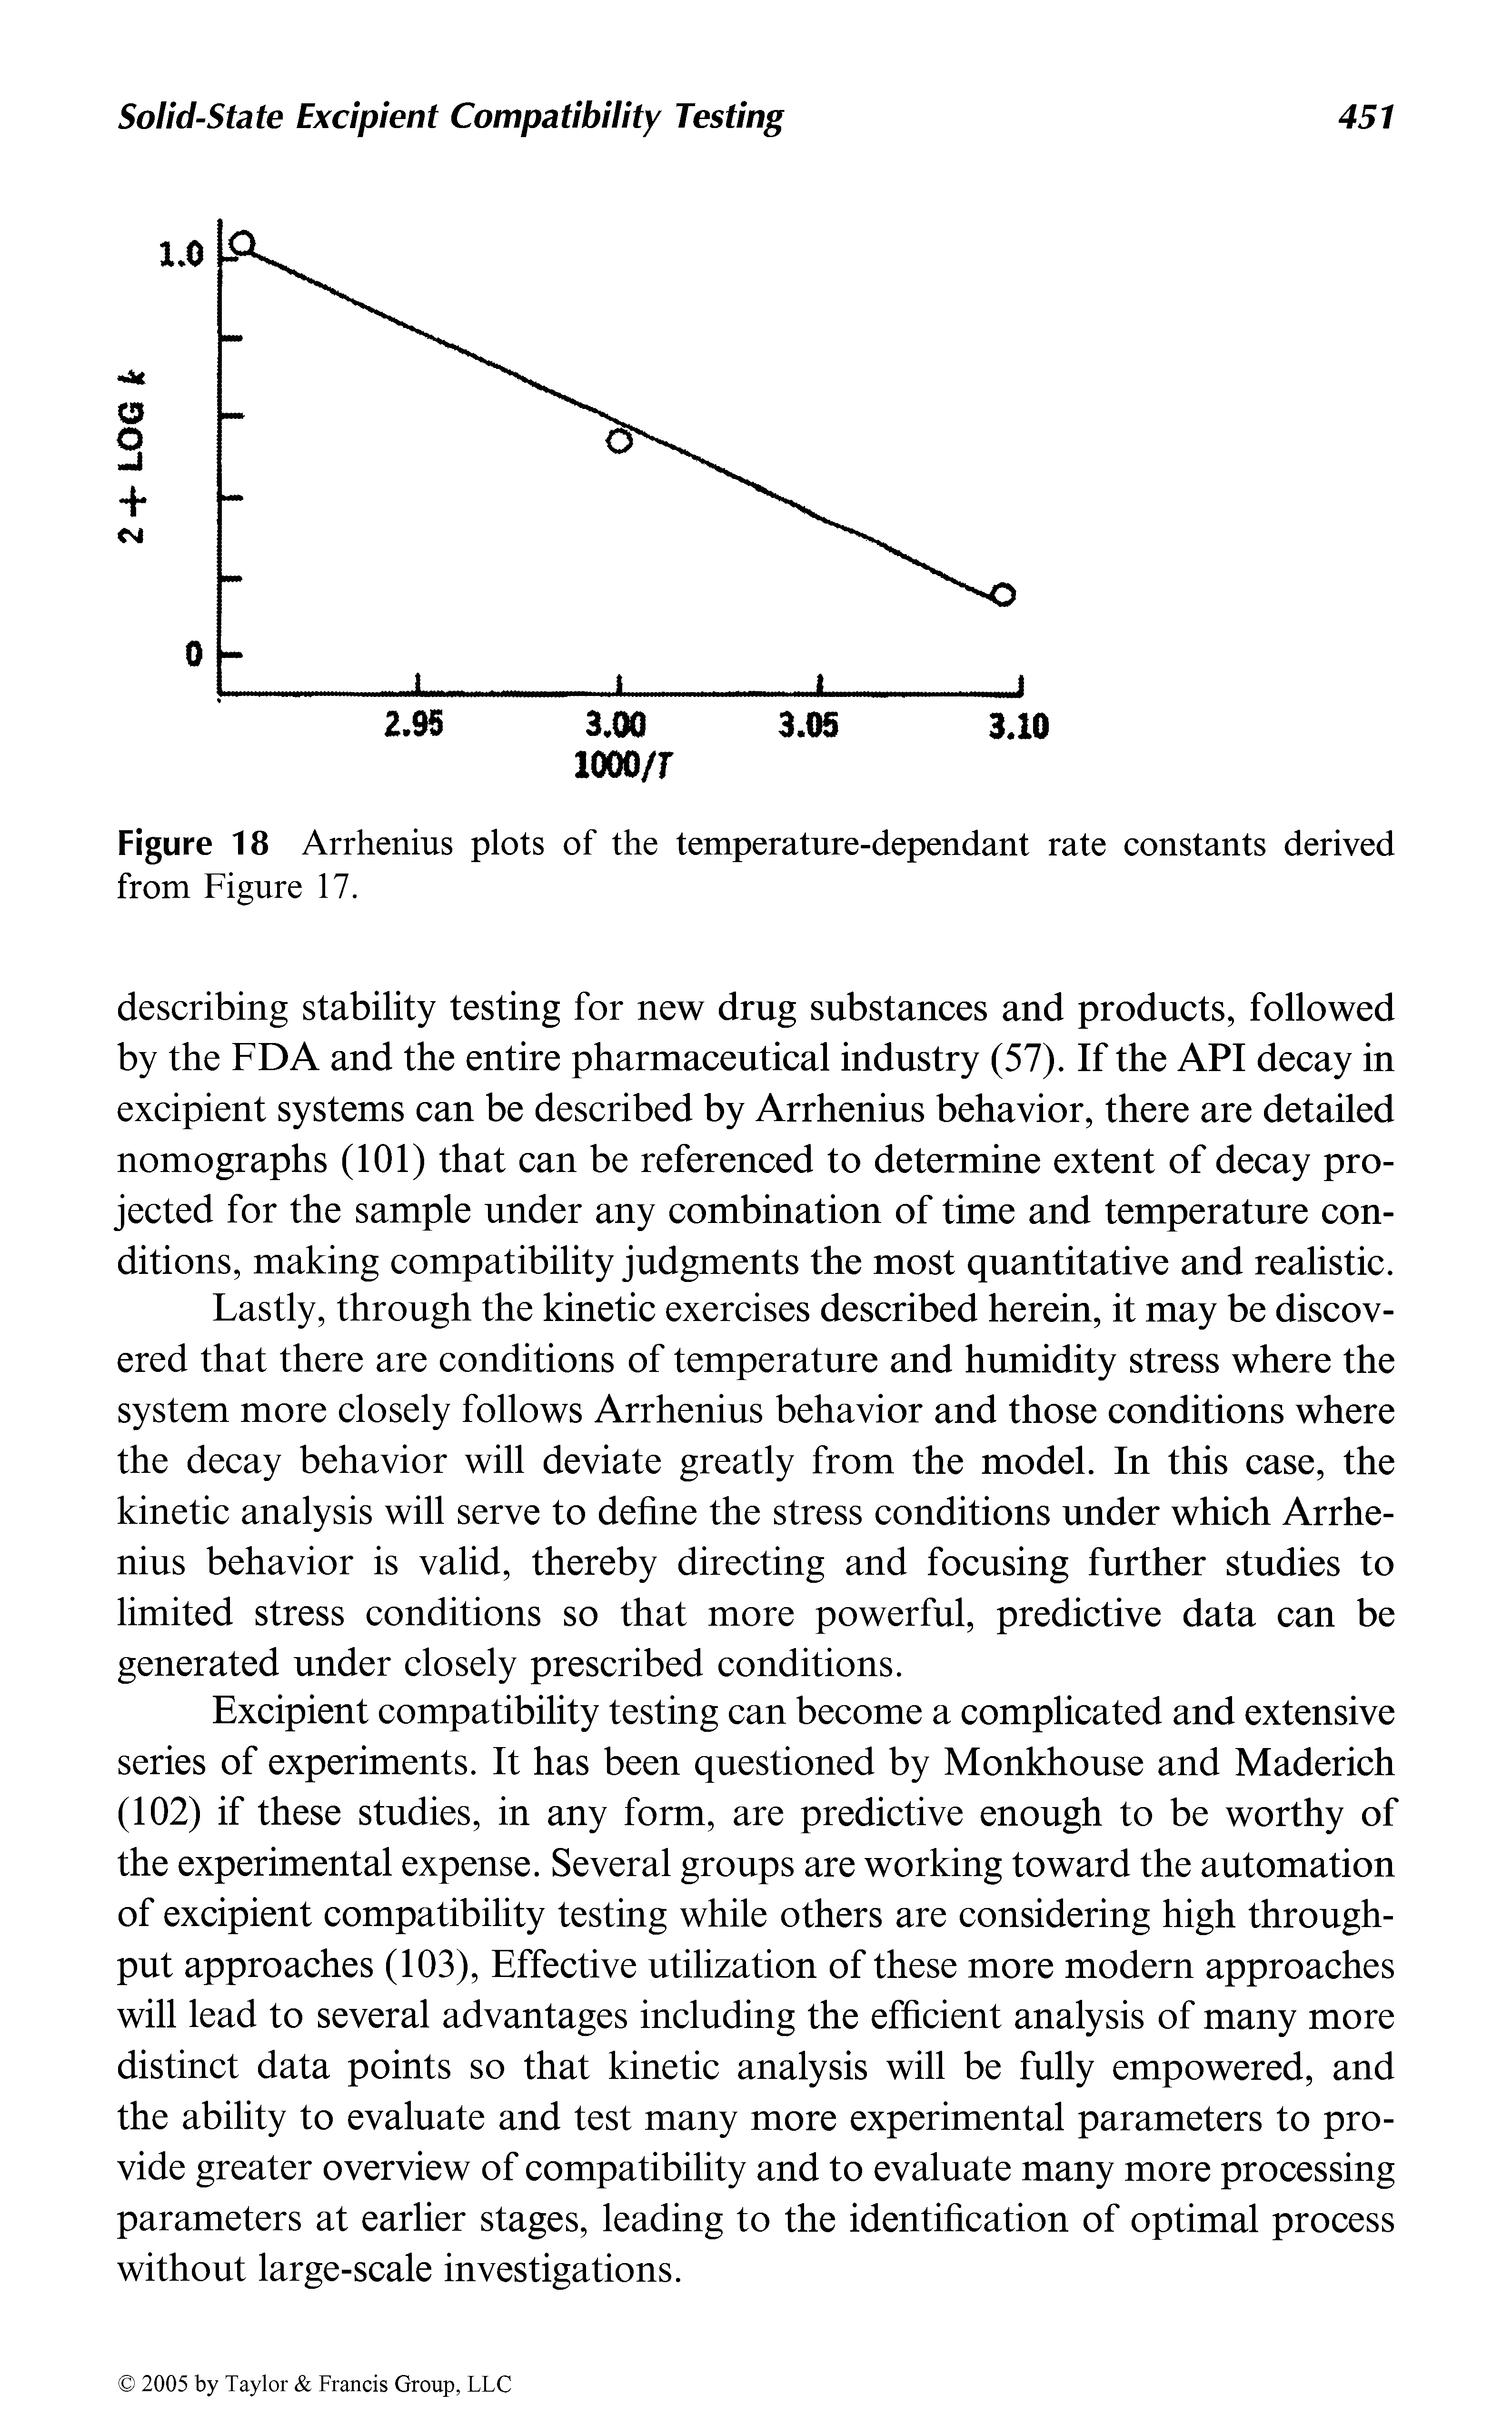 Figure 18 Arrhenius plots of the temperature-dependant rate constants derived from Figure 17.